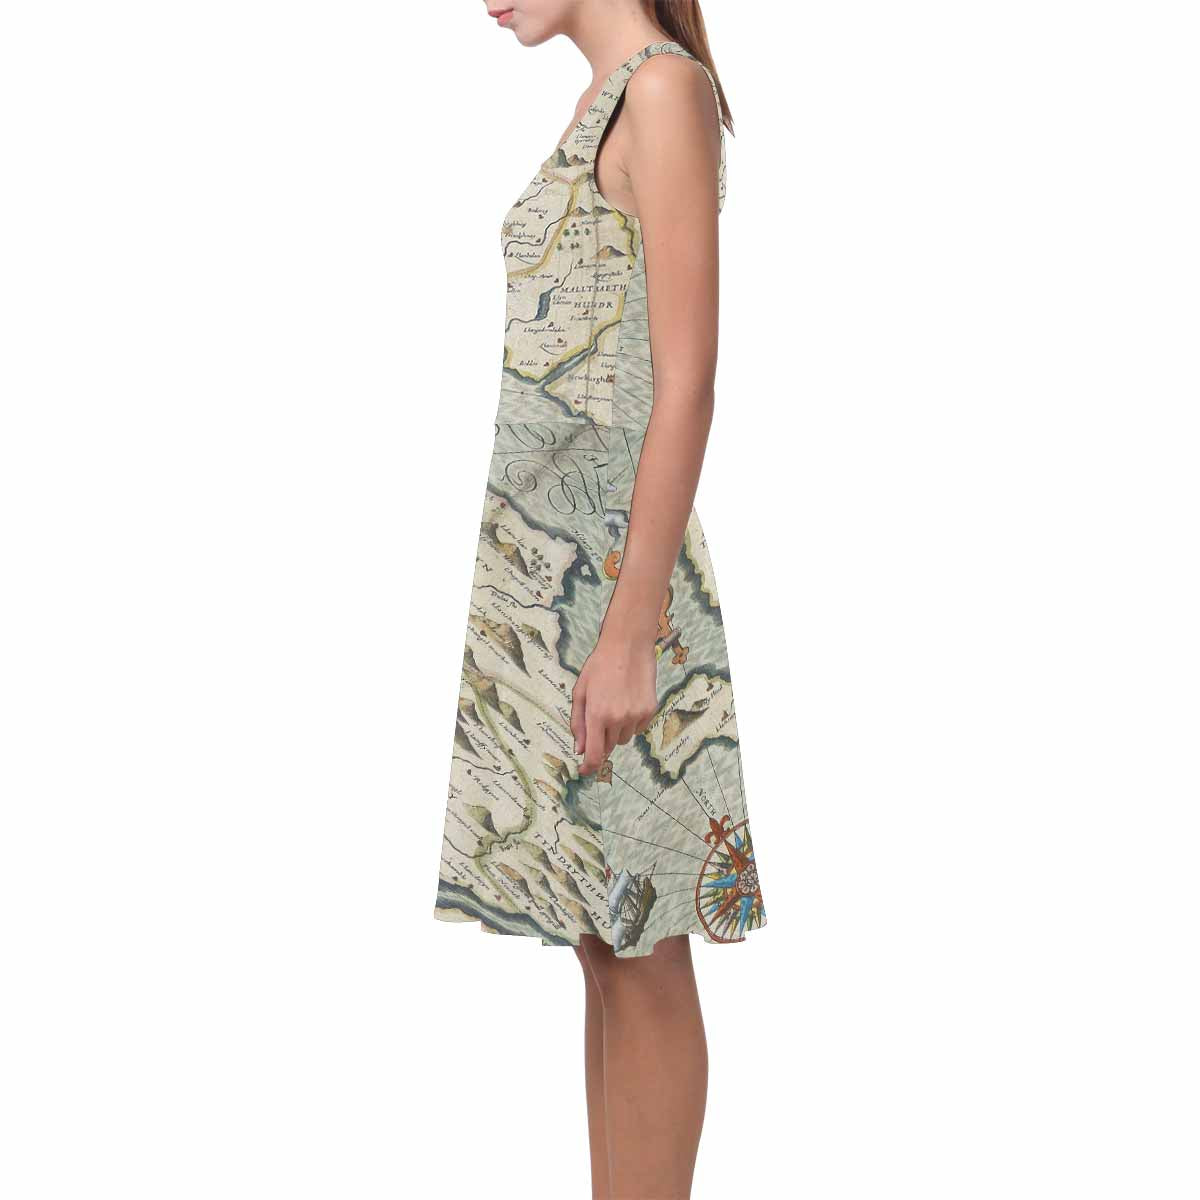 Antique Map casual summer dress, MODEL 09534, design 05